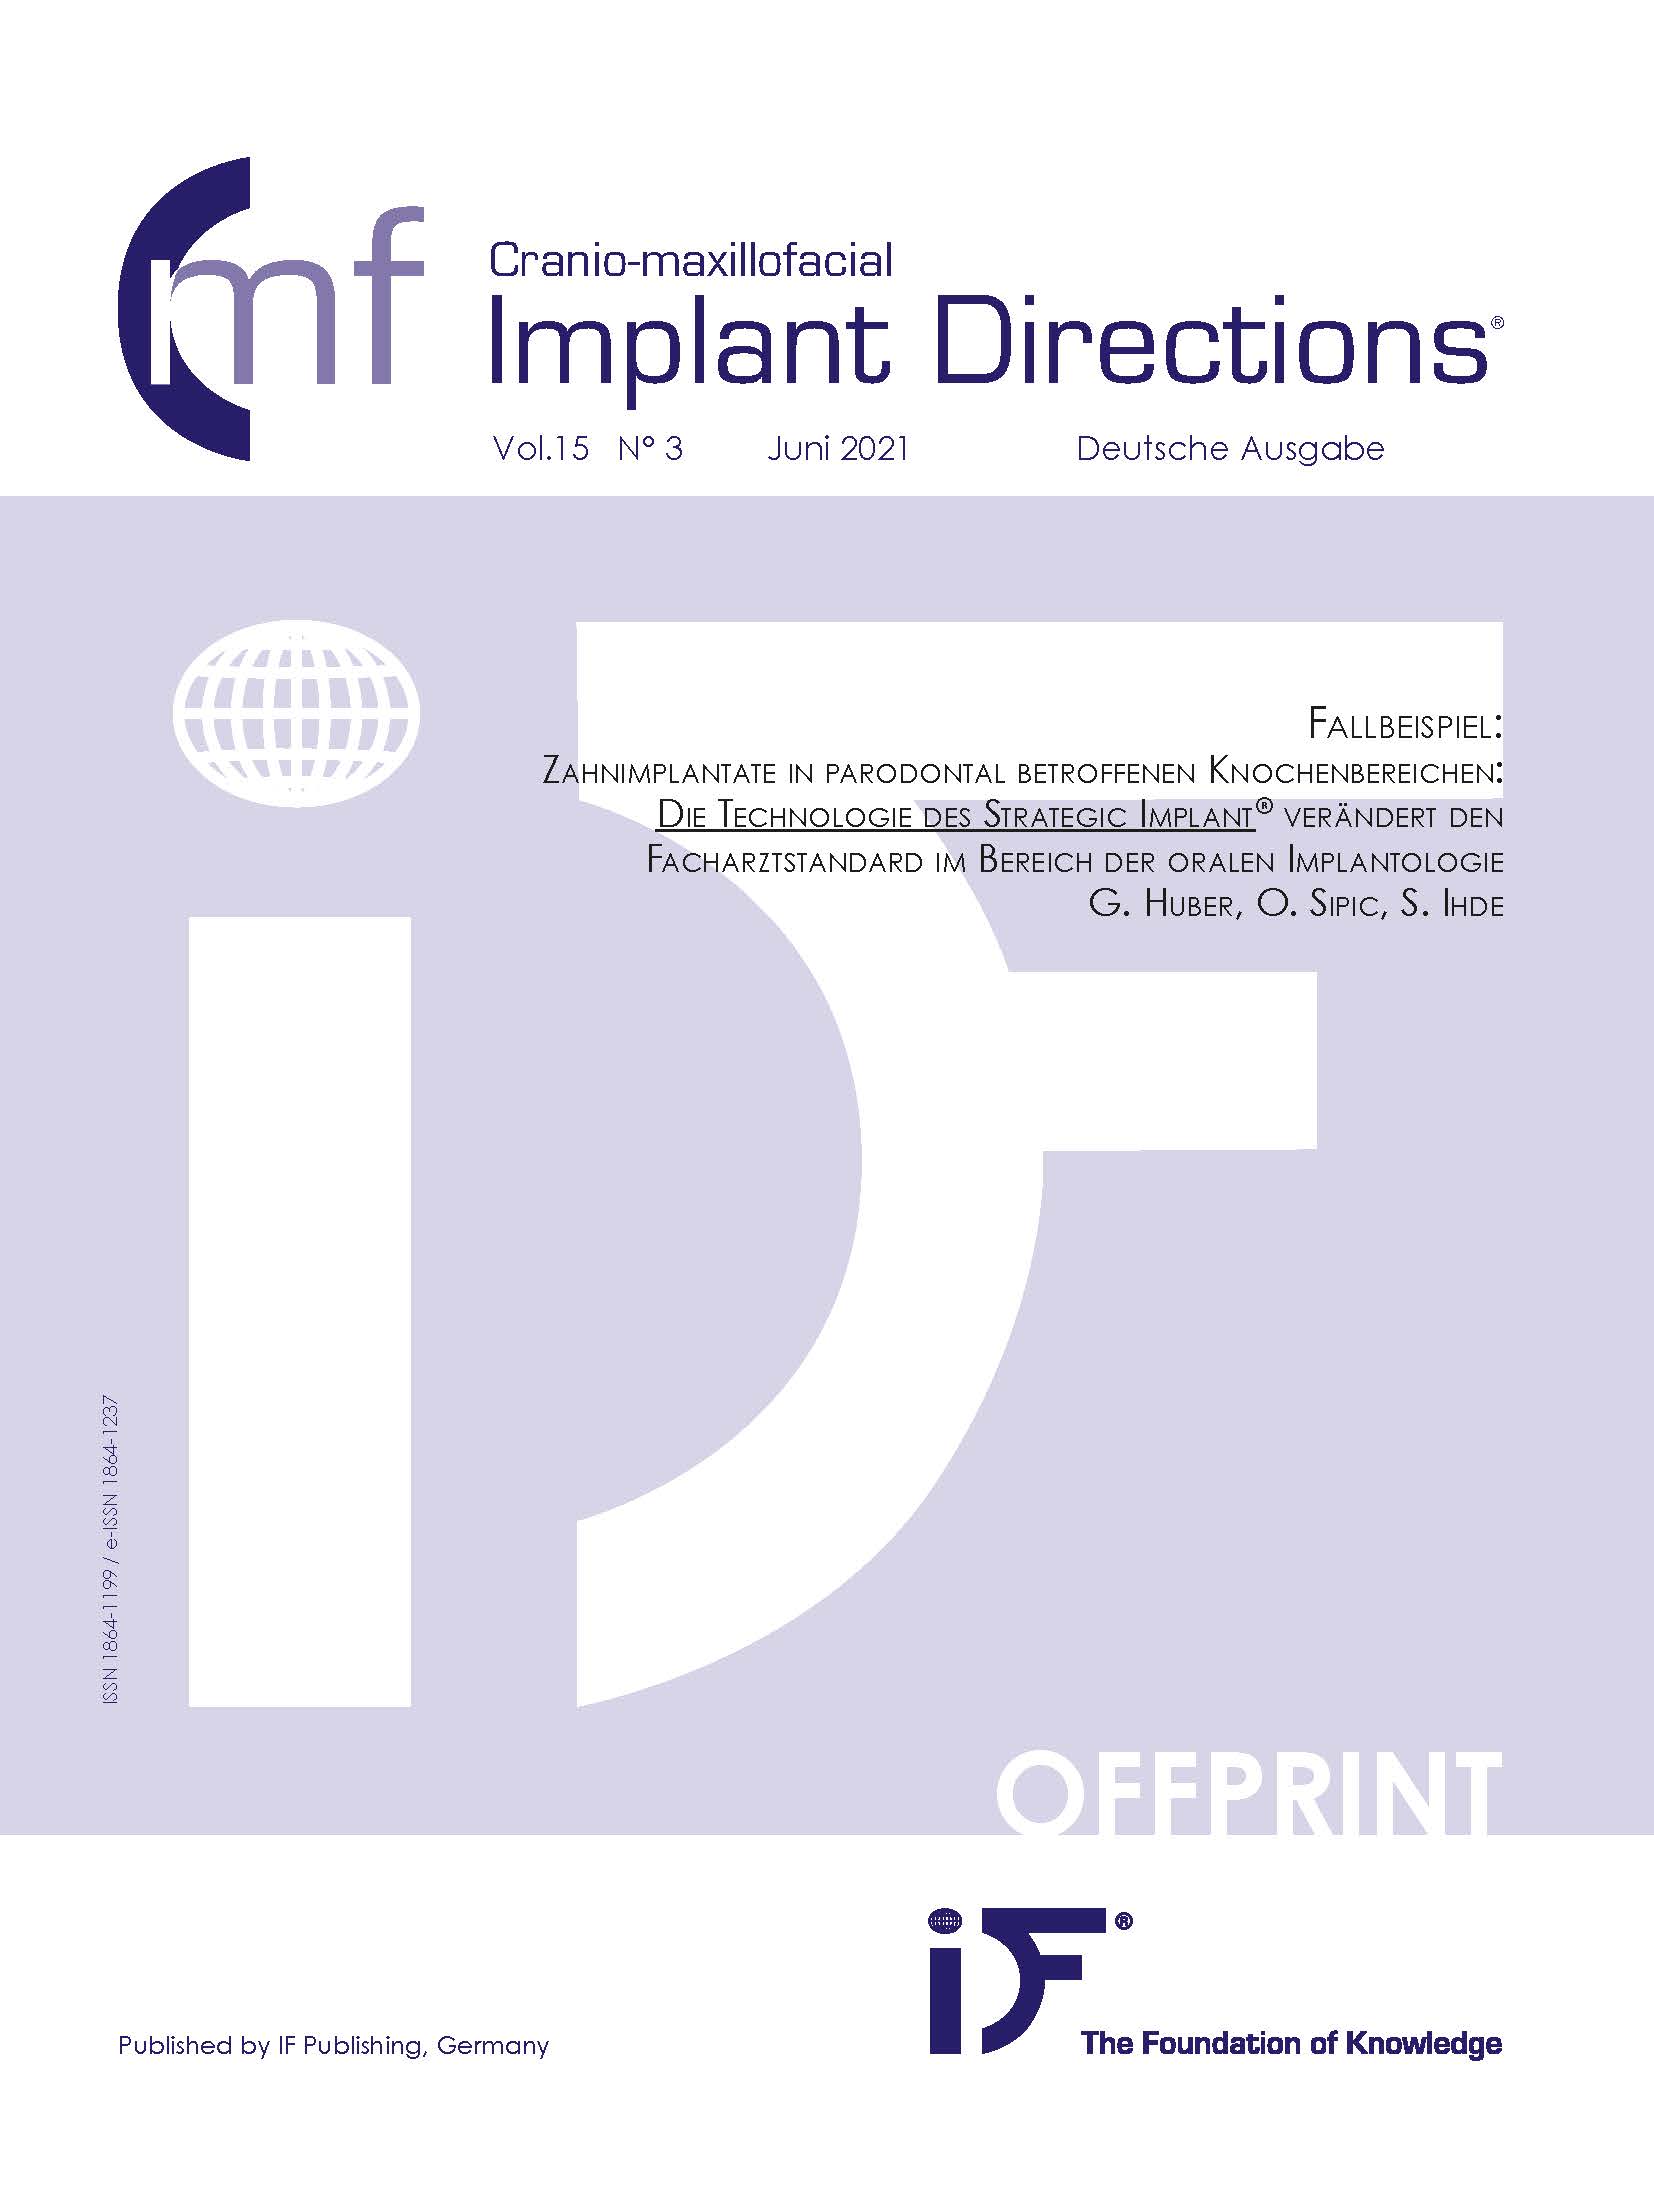 Preview Cranio-maxillofacial Implant Directions Vol. 15 Issue 3 DE - June 2021